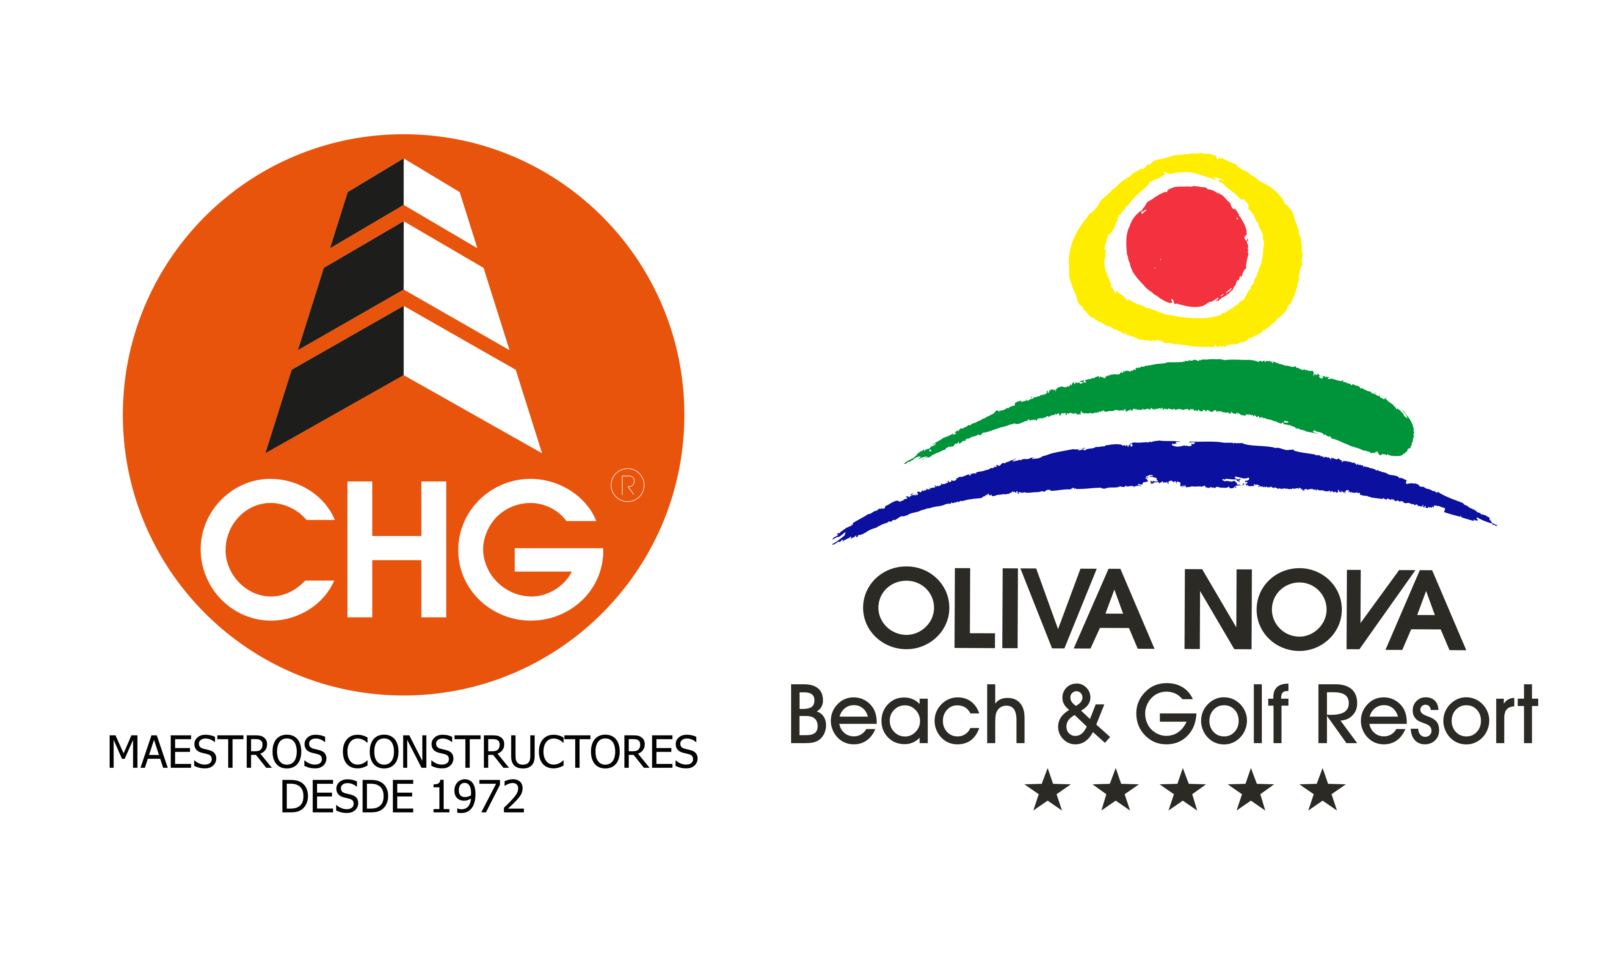 Oliva Nova Beach & Golf Resort – CHG